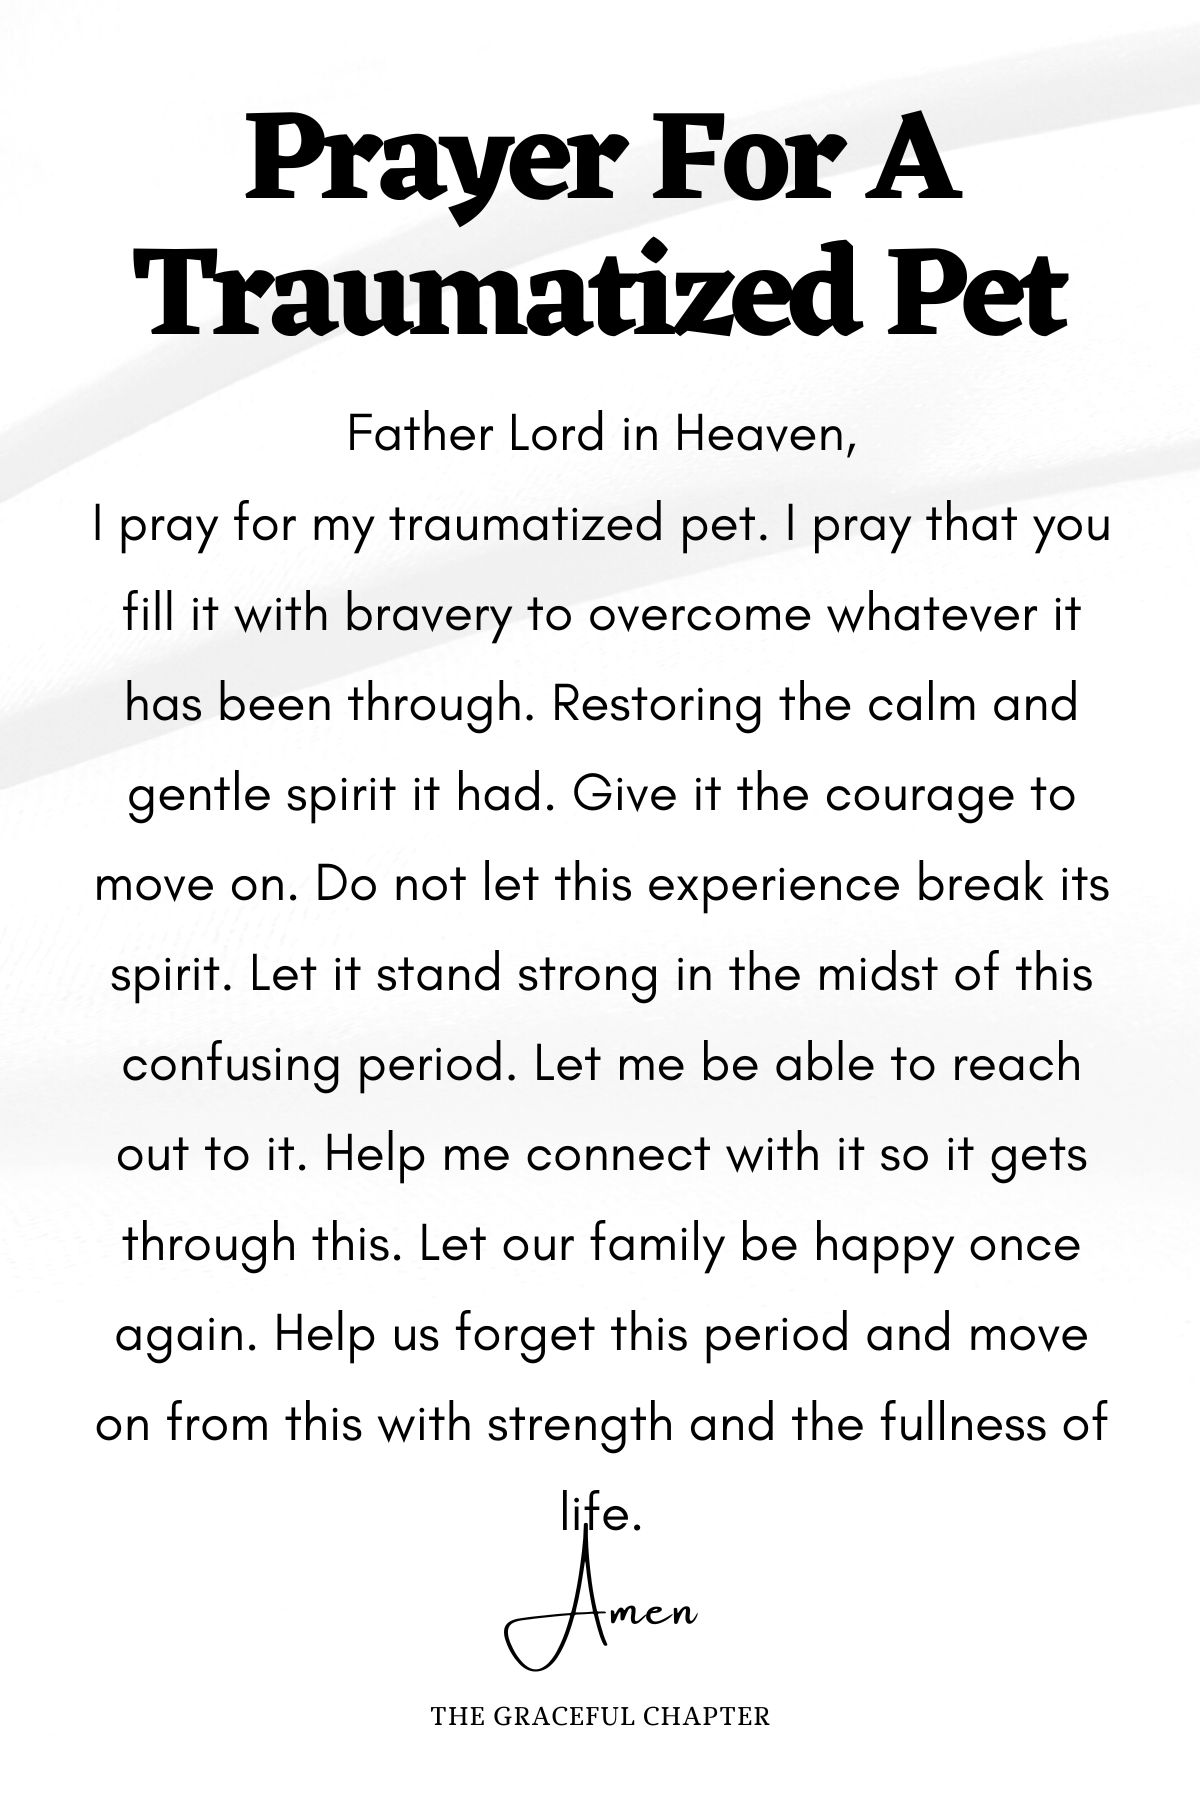 Prayer for a traumatized pet - prayers for pets